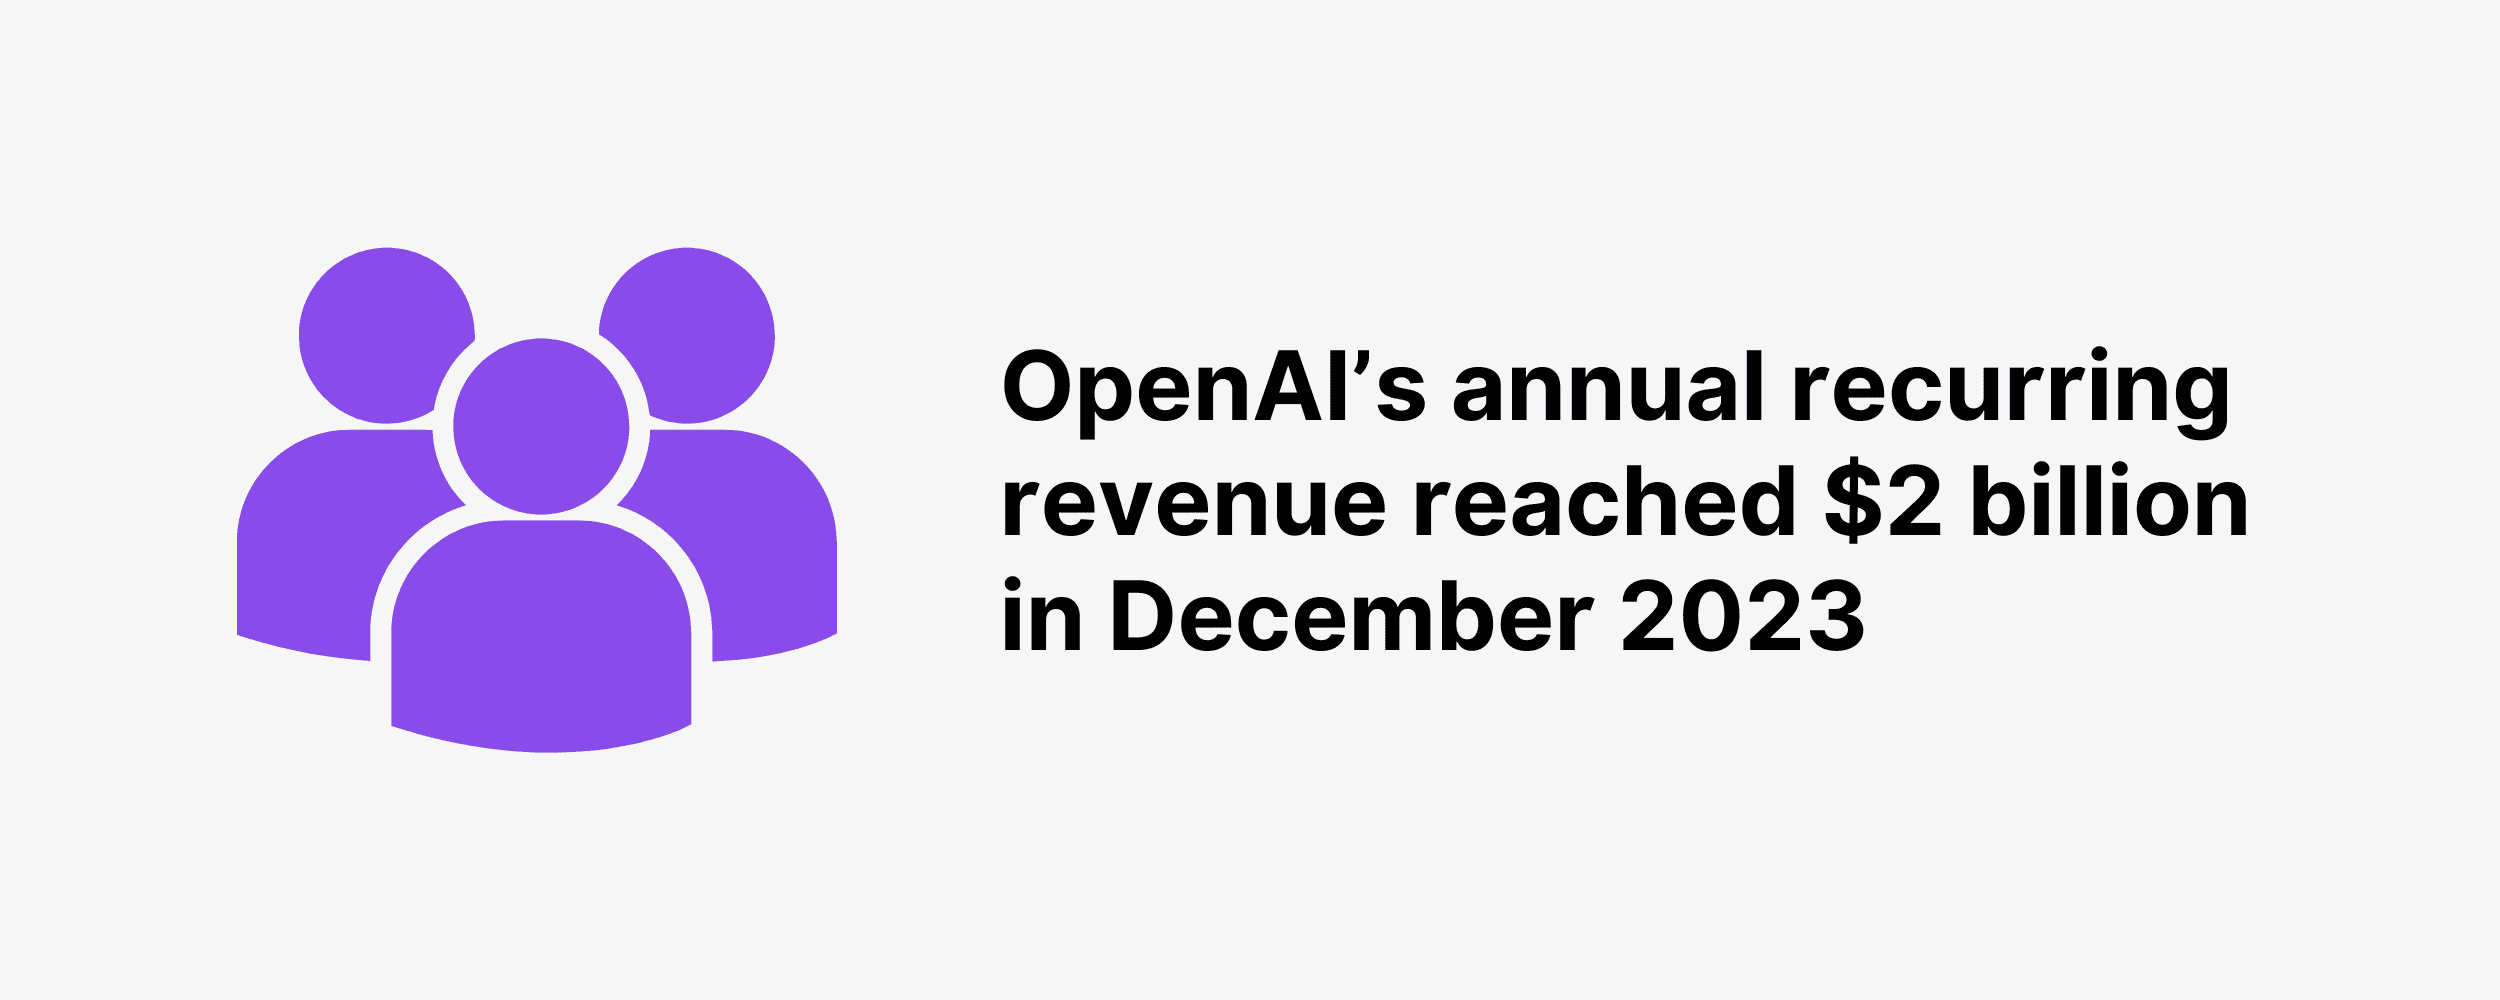 OpenAI’s annual recurring revenue reached $2 billion in December 2023